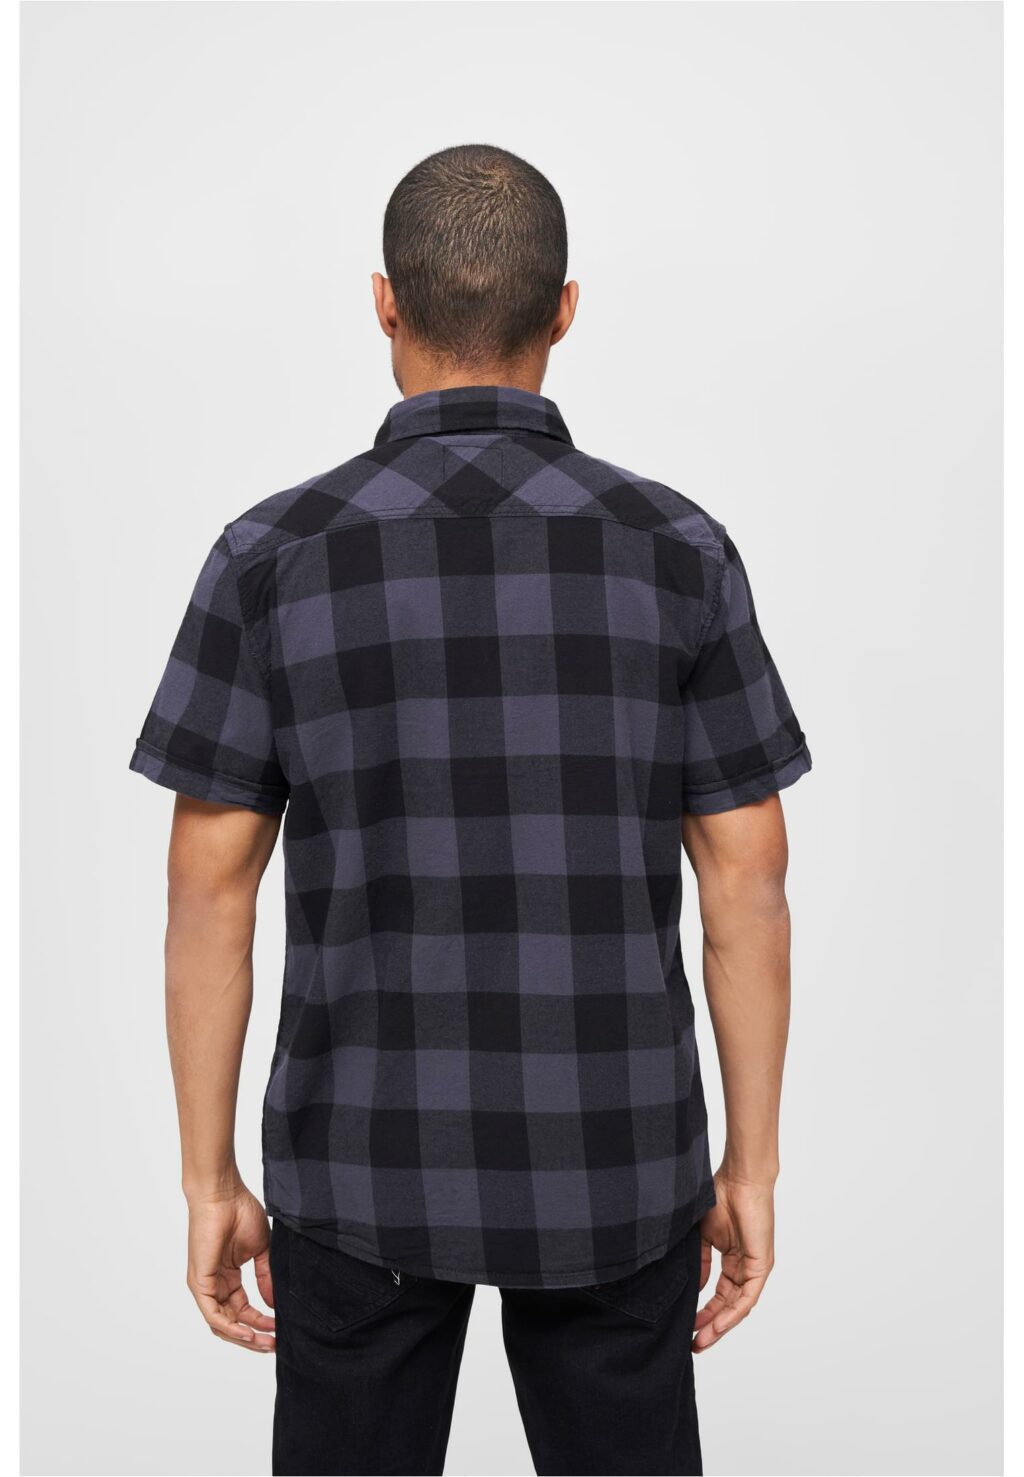 Brandit Checkshirt Halfsleeve black/grey BD4032